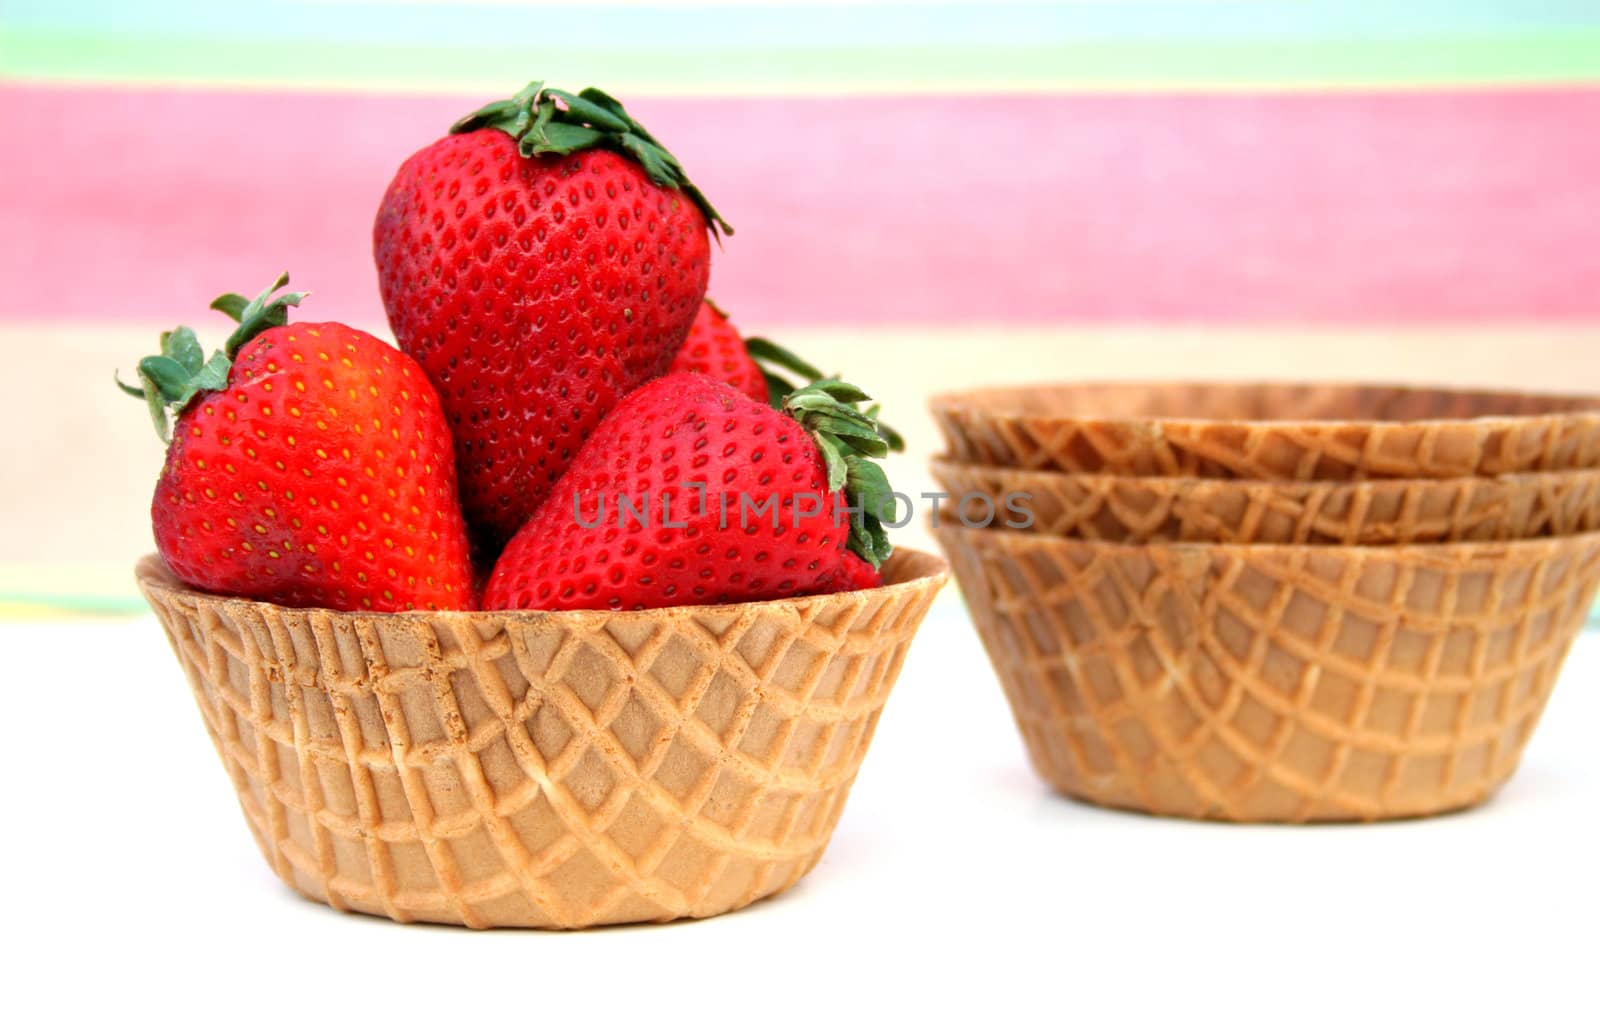 Strawberry Dessert by thephotoguy